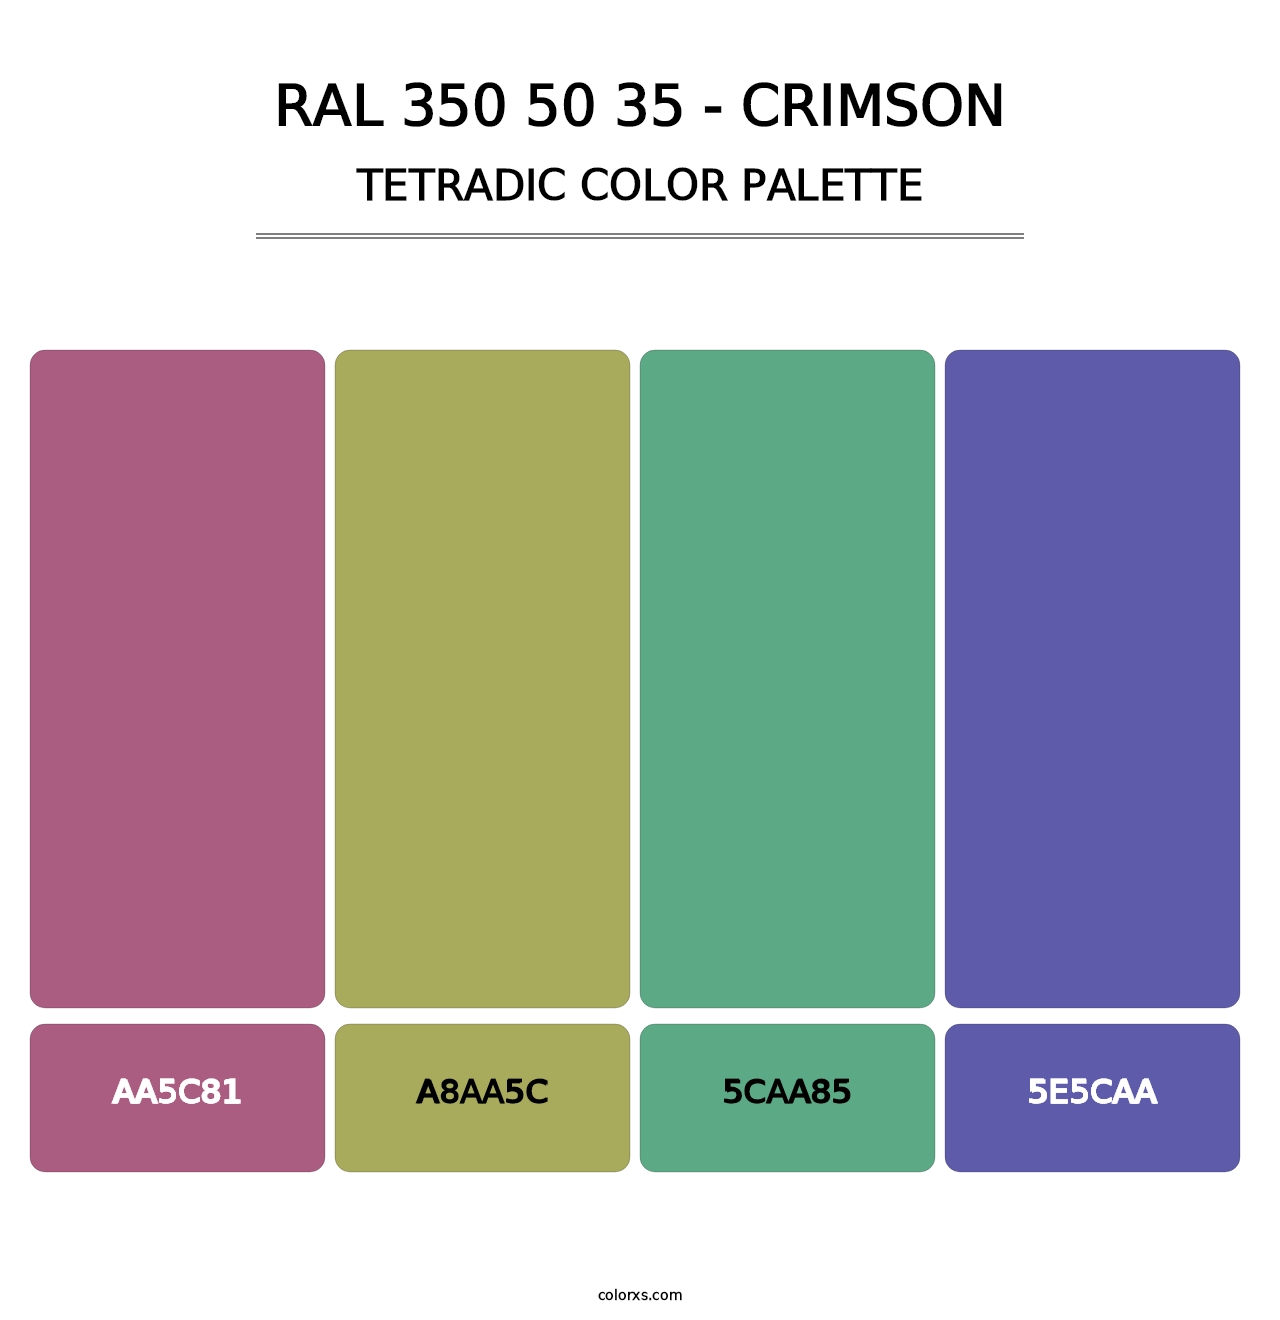 RAL 350 50 35 - Crimson - Tetradic Color Palette